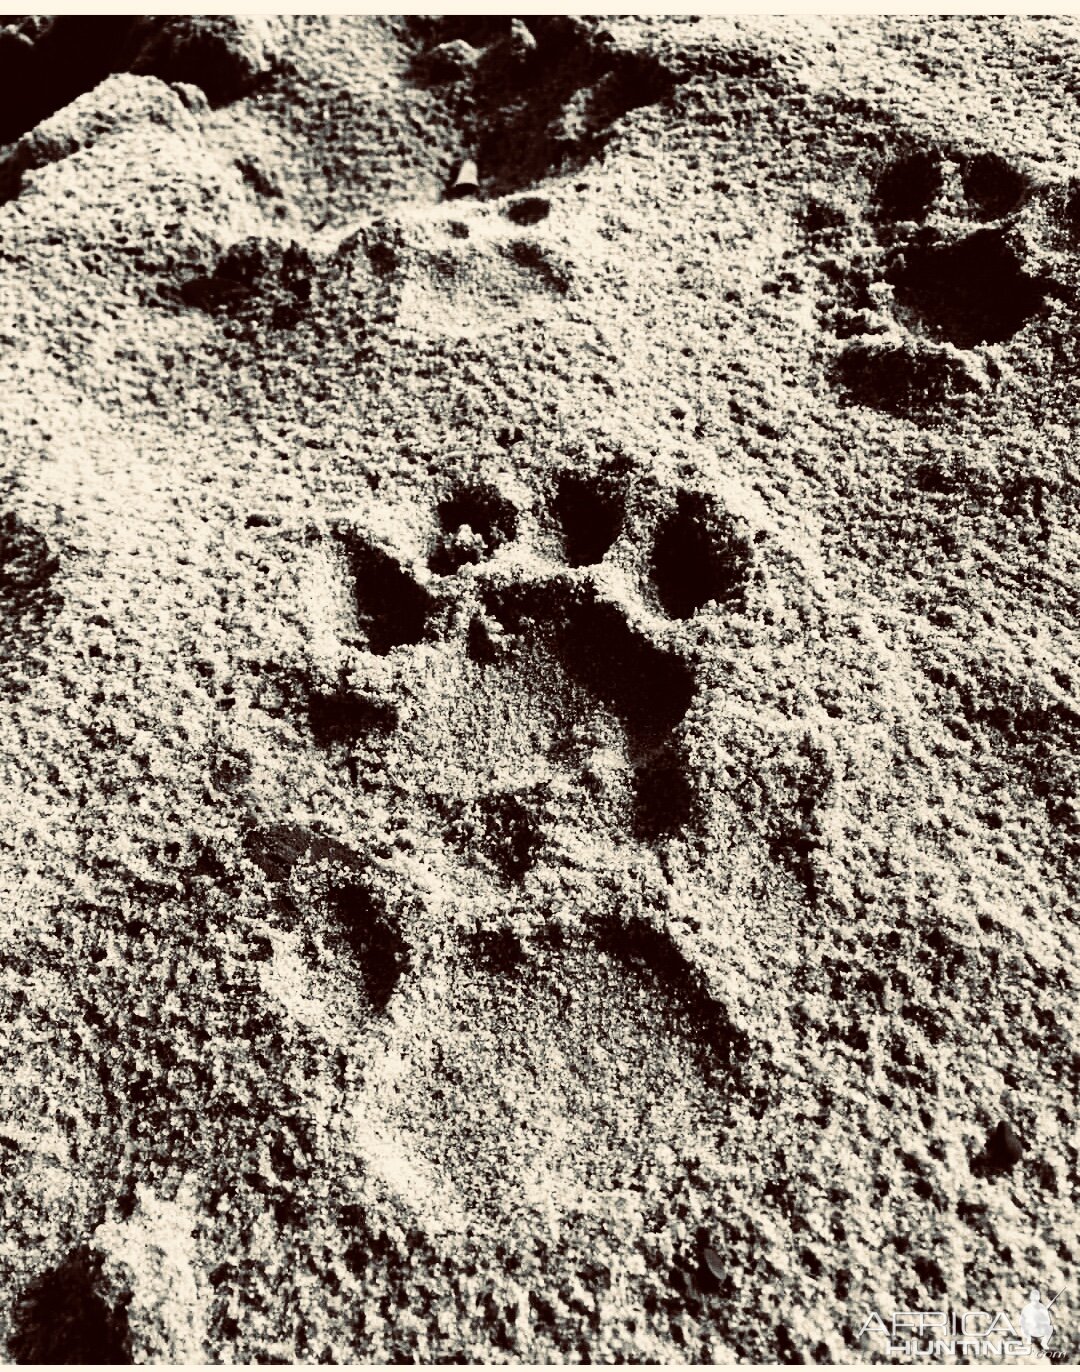 panther tracks